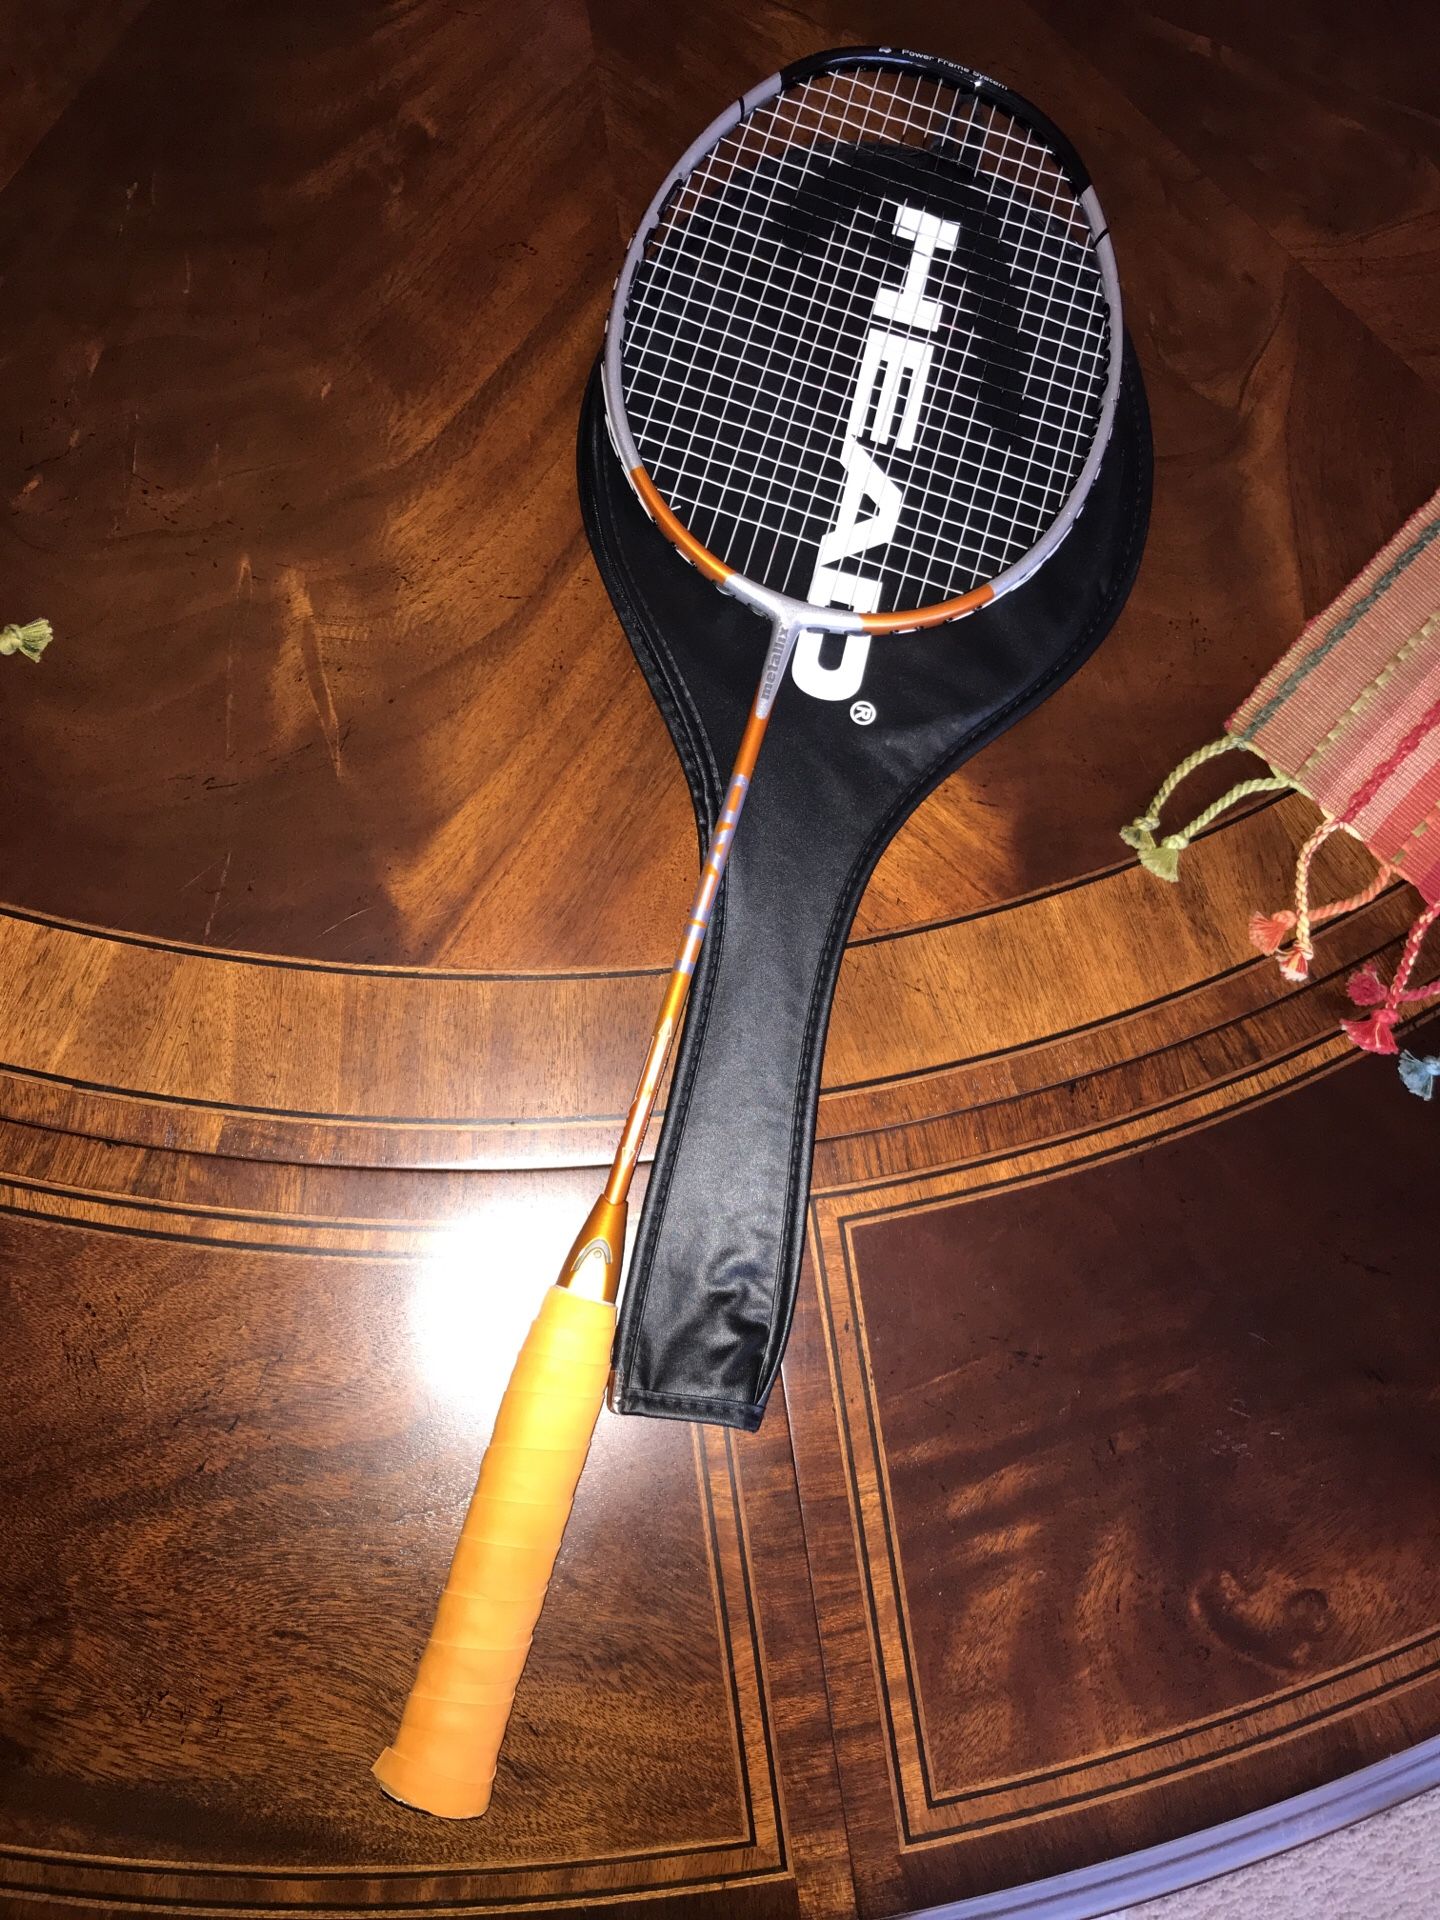 Head Badminton Racket